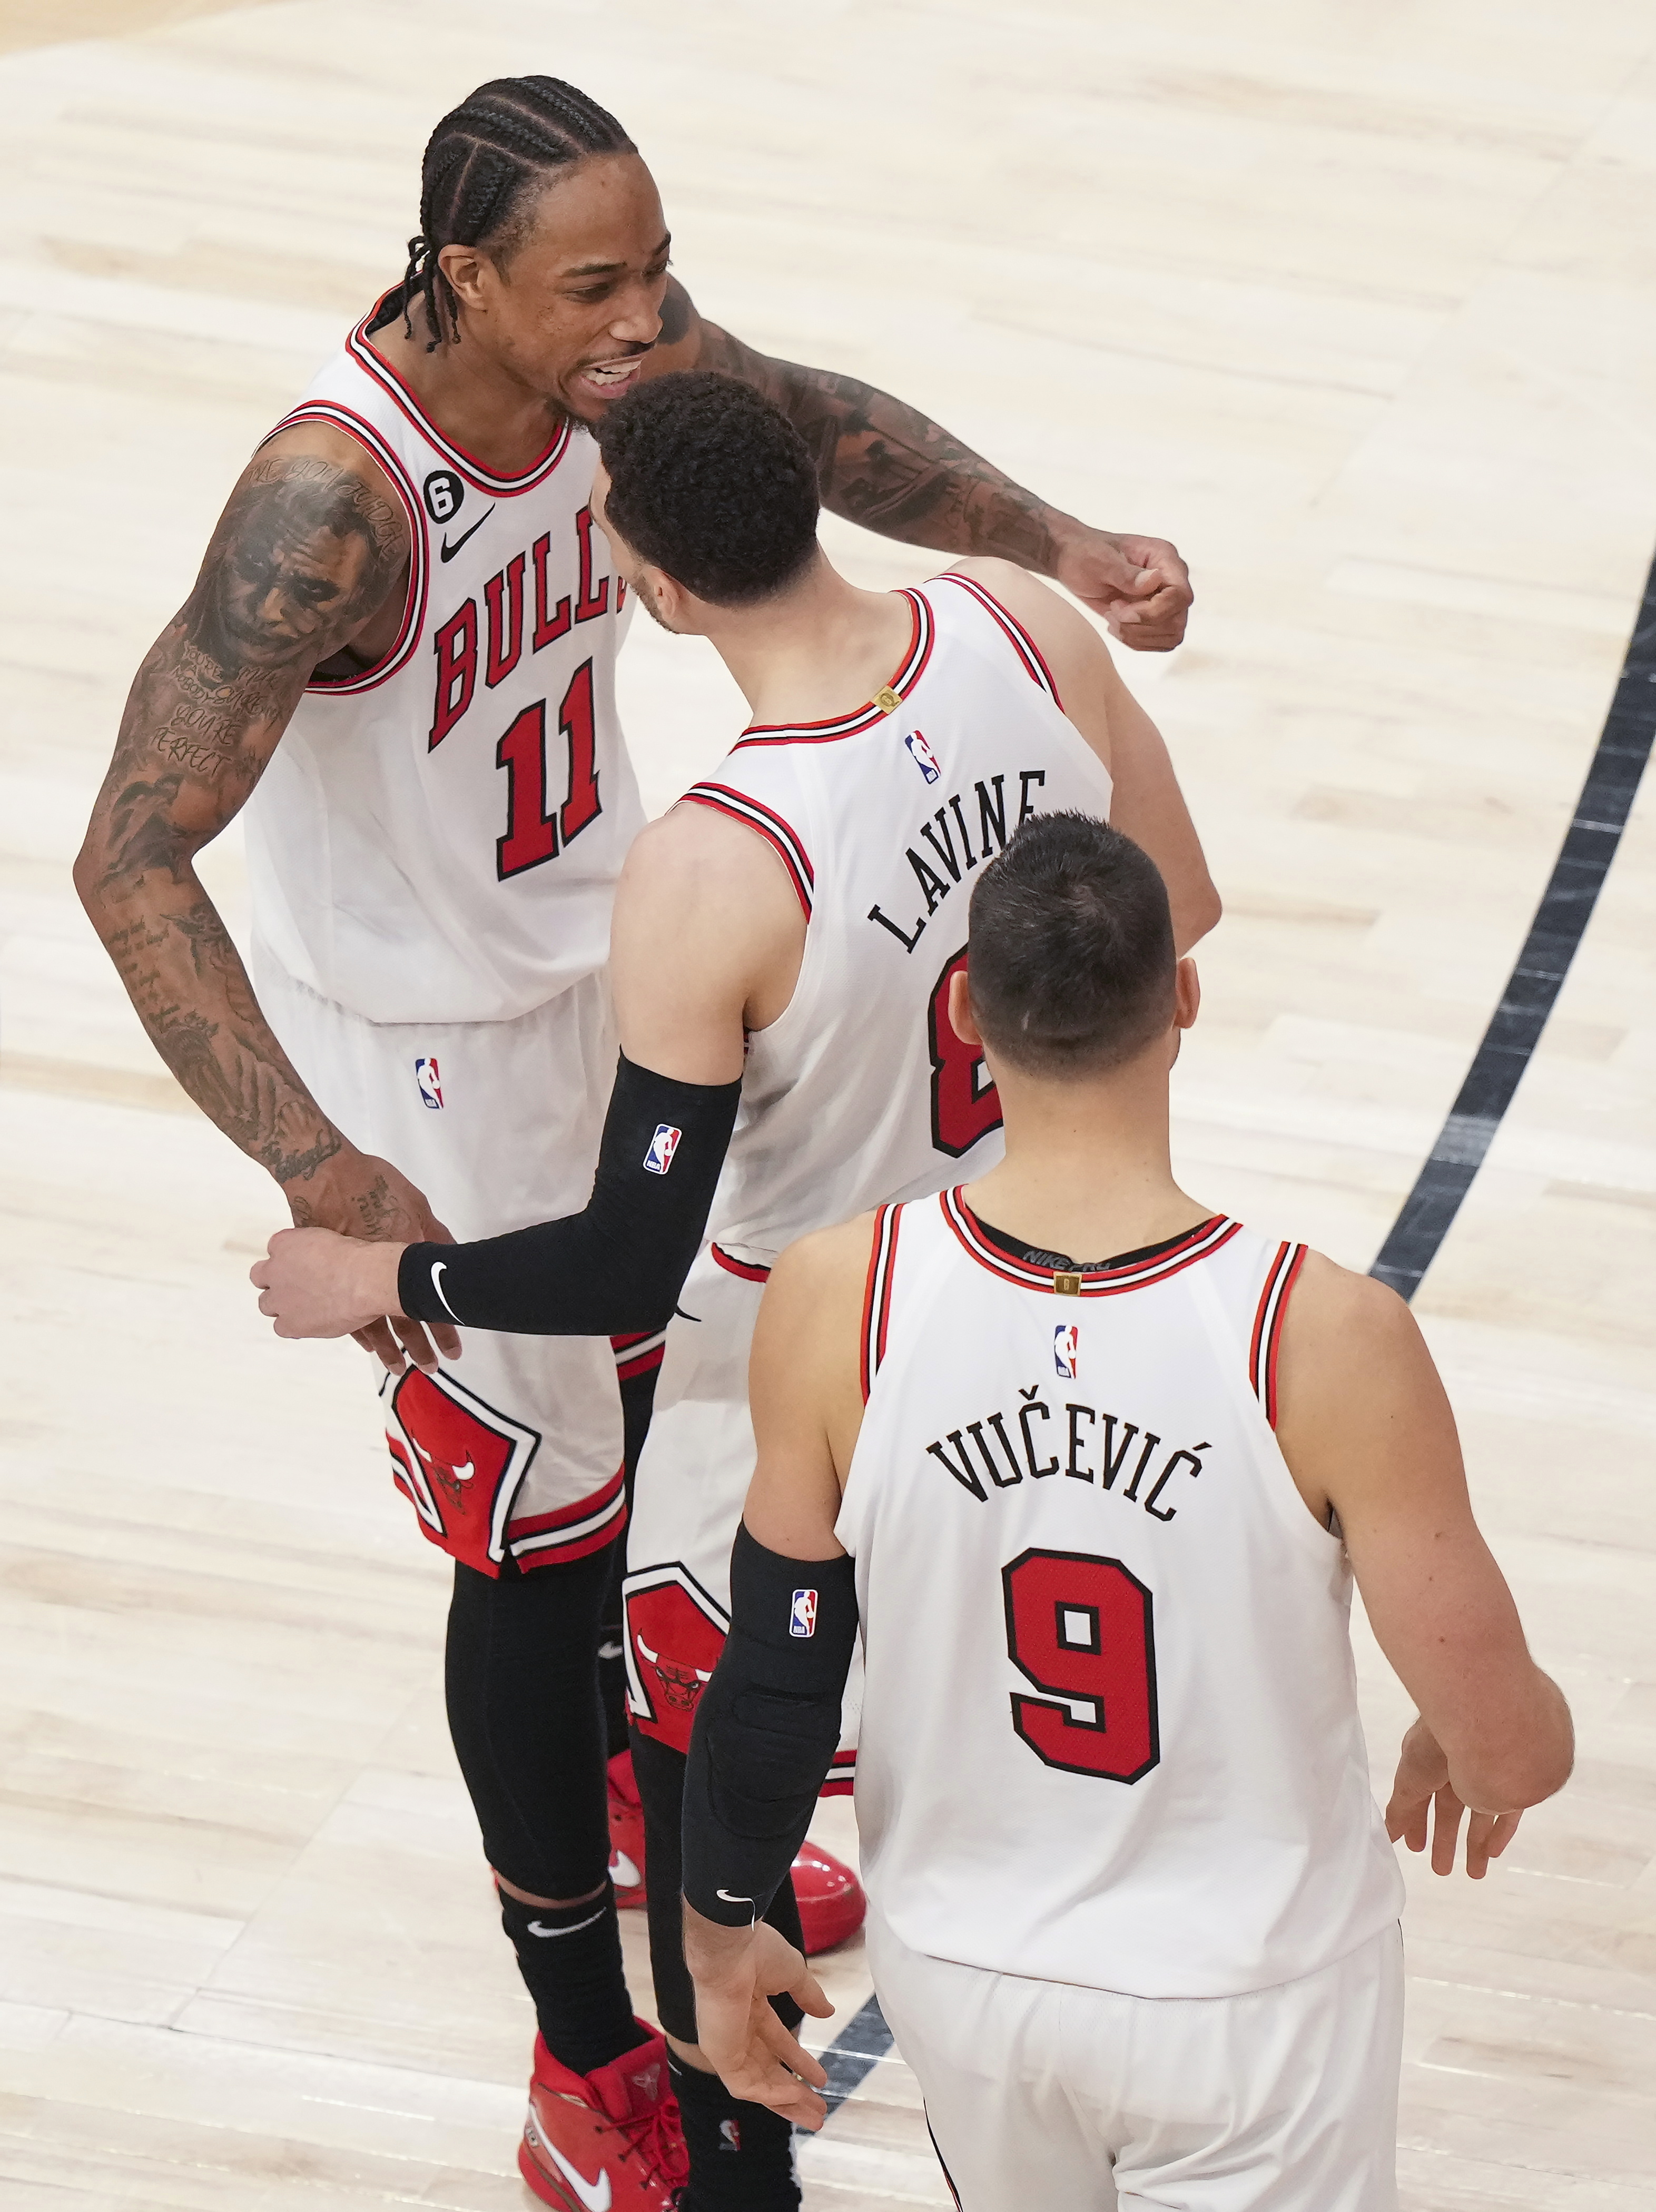 LaVine scores 39, Bulls beat Raptors 109-105 in play-in game